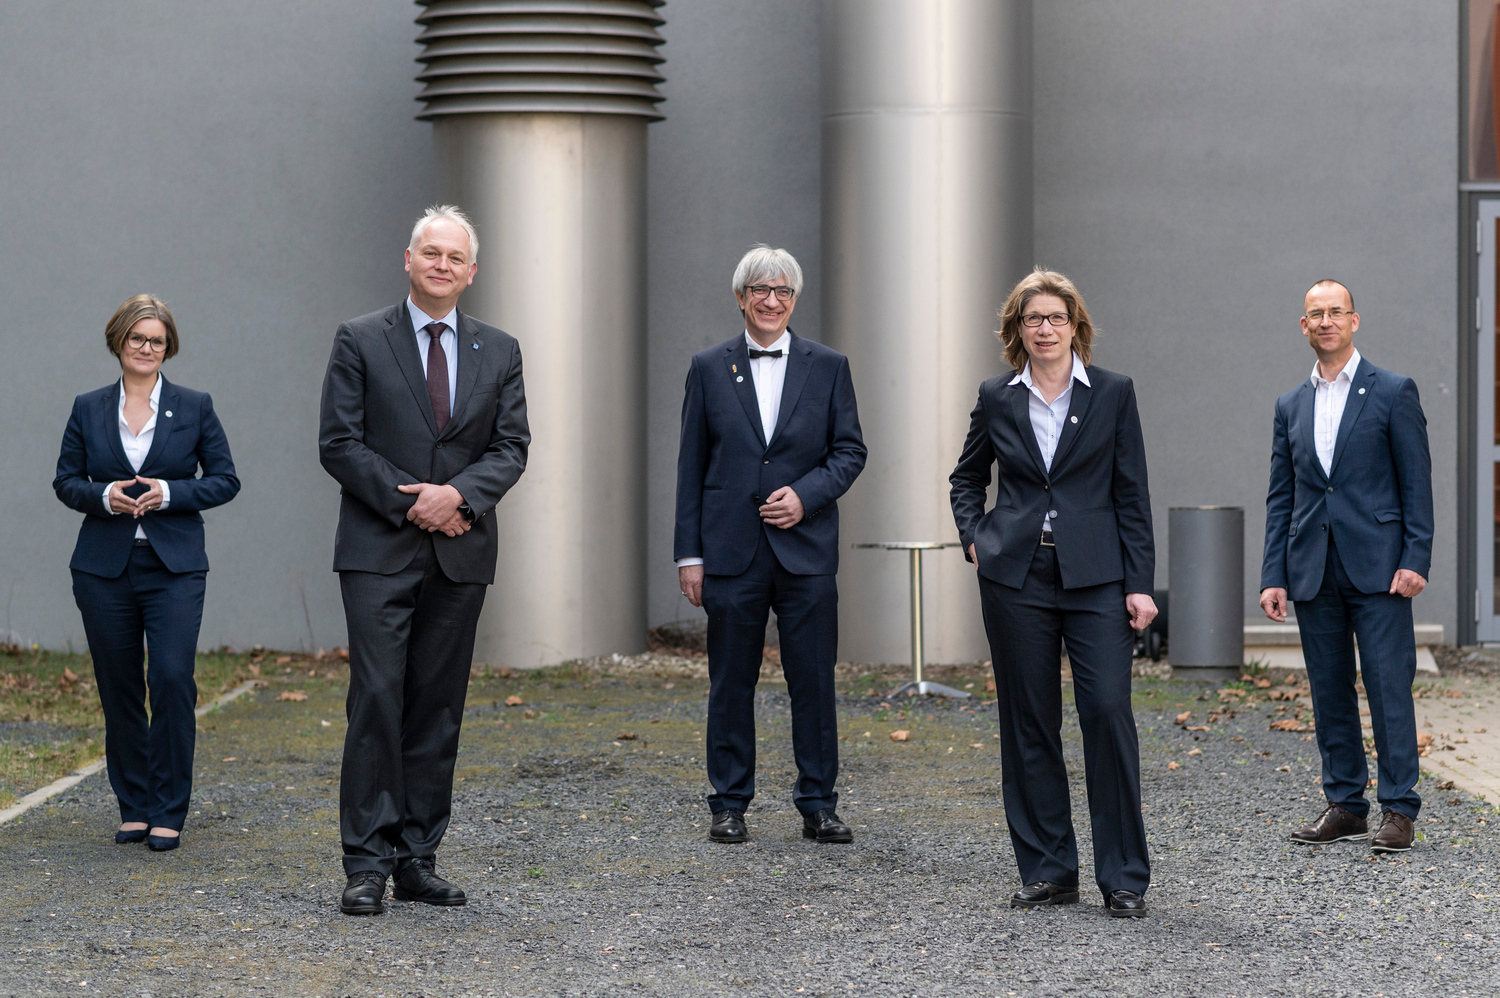 Das Präsidium der Universität Göttingen ab dem 1. April 2021: Dr. Valérie Schüller, Prof. Dr. Bernhard Brümmer, Prof. Dr. Metin Tolan, Prof. Dr. Anke Holler und Prof. Dr. Norbert Lossau (von links).